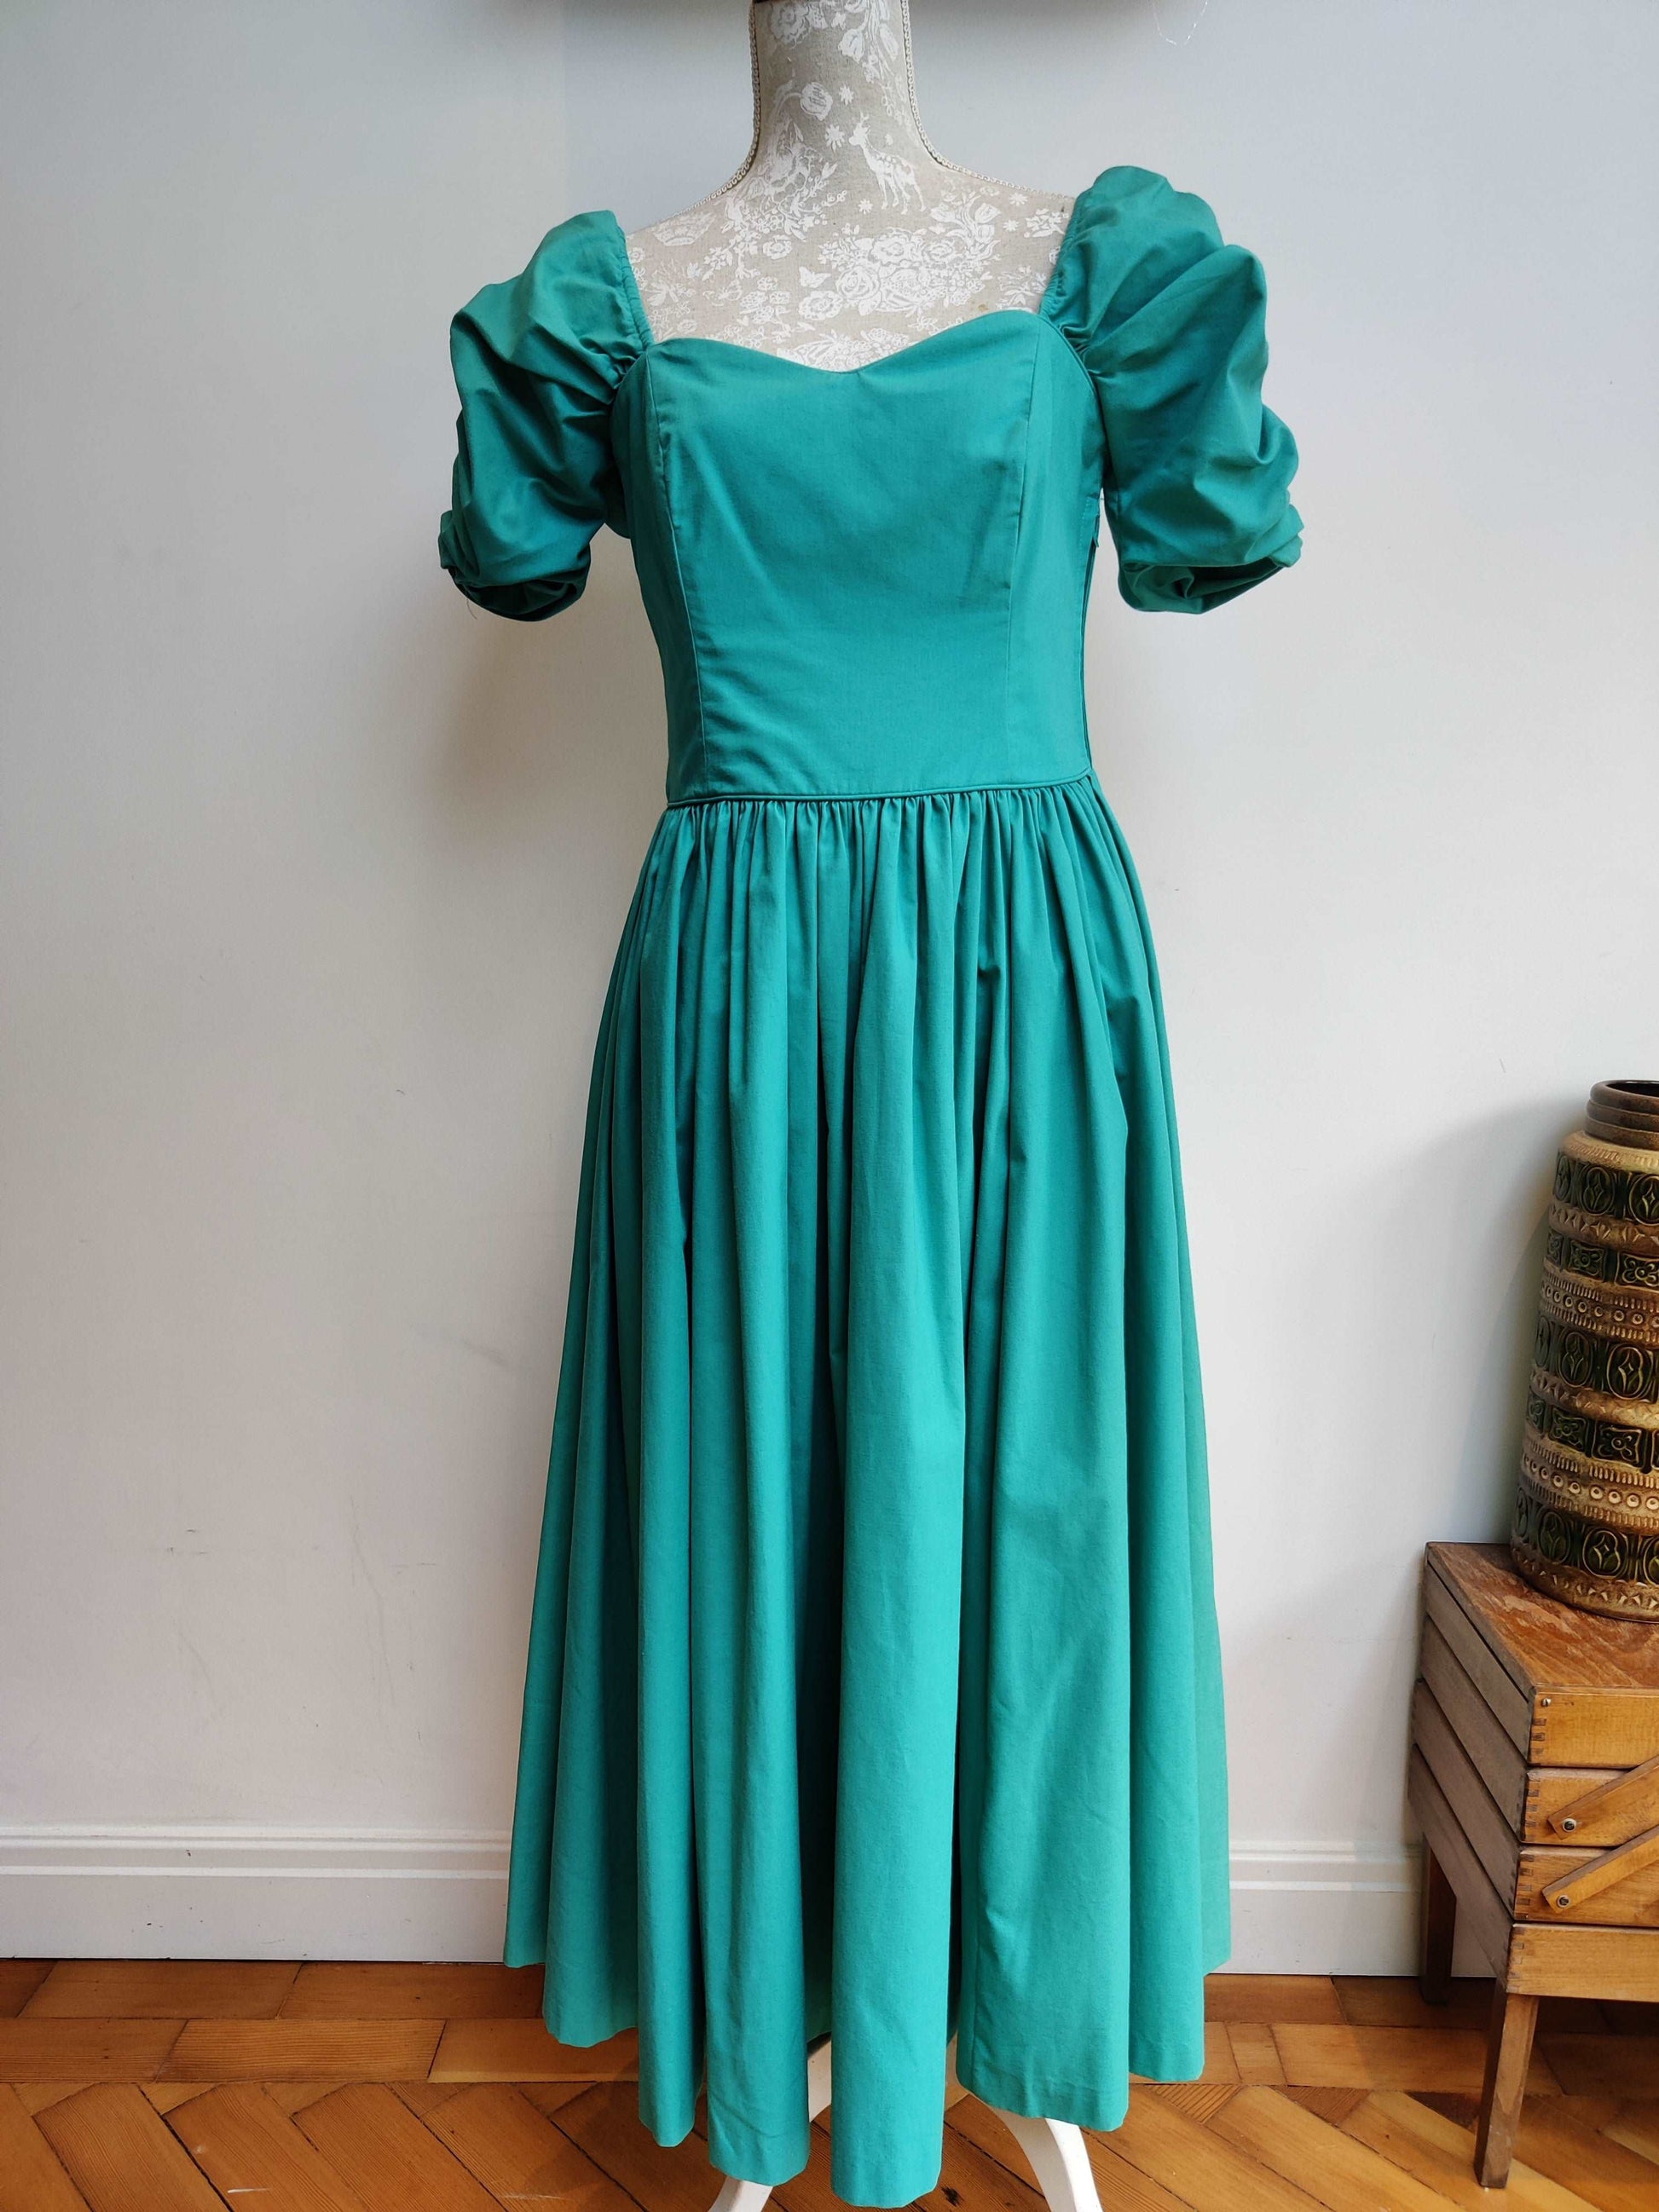 Size 10 vintage Laura Ashley bridesmaid dress